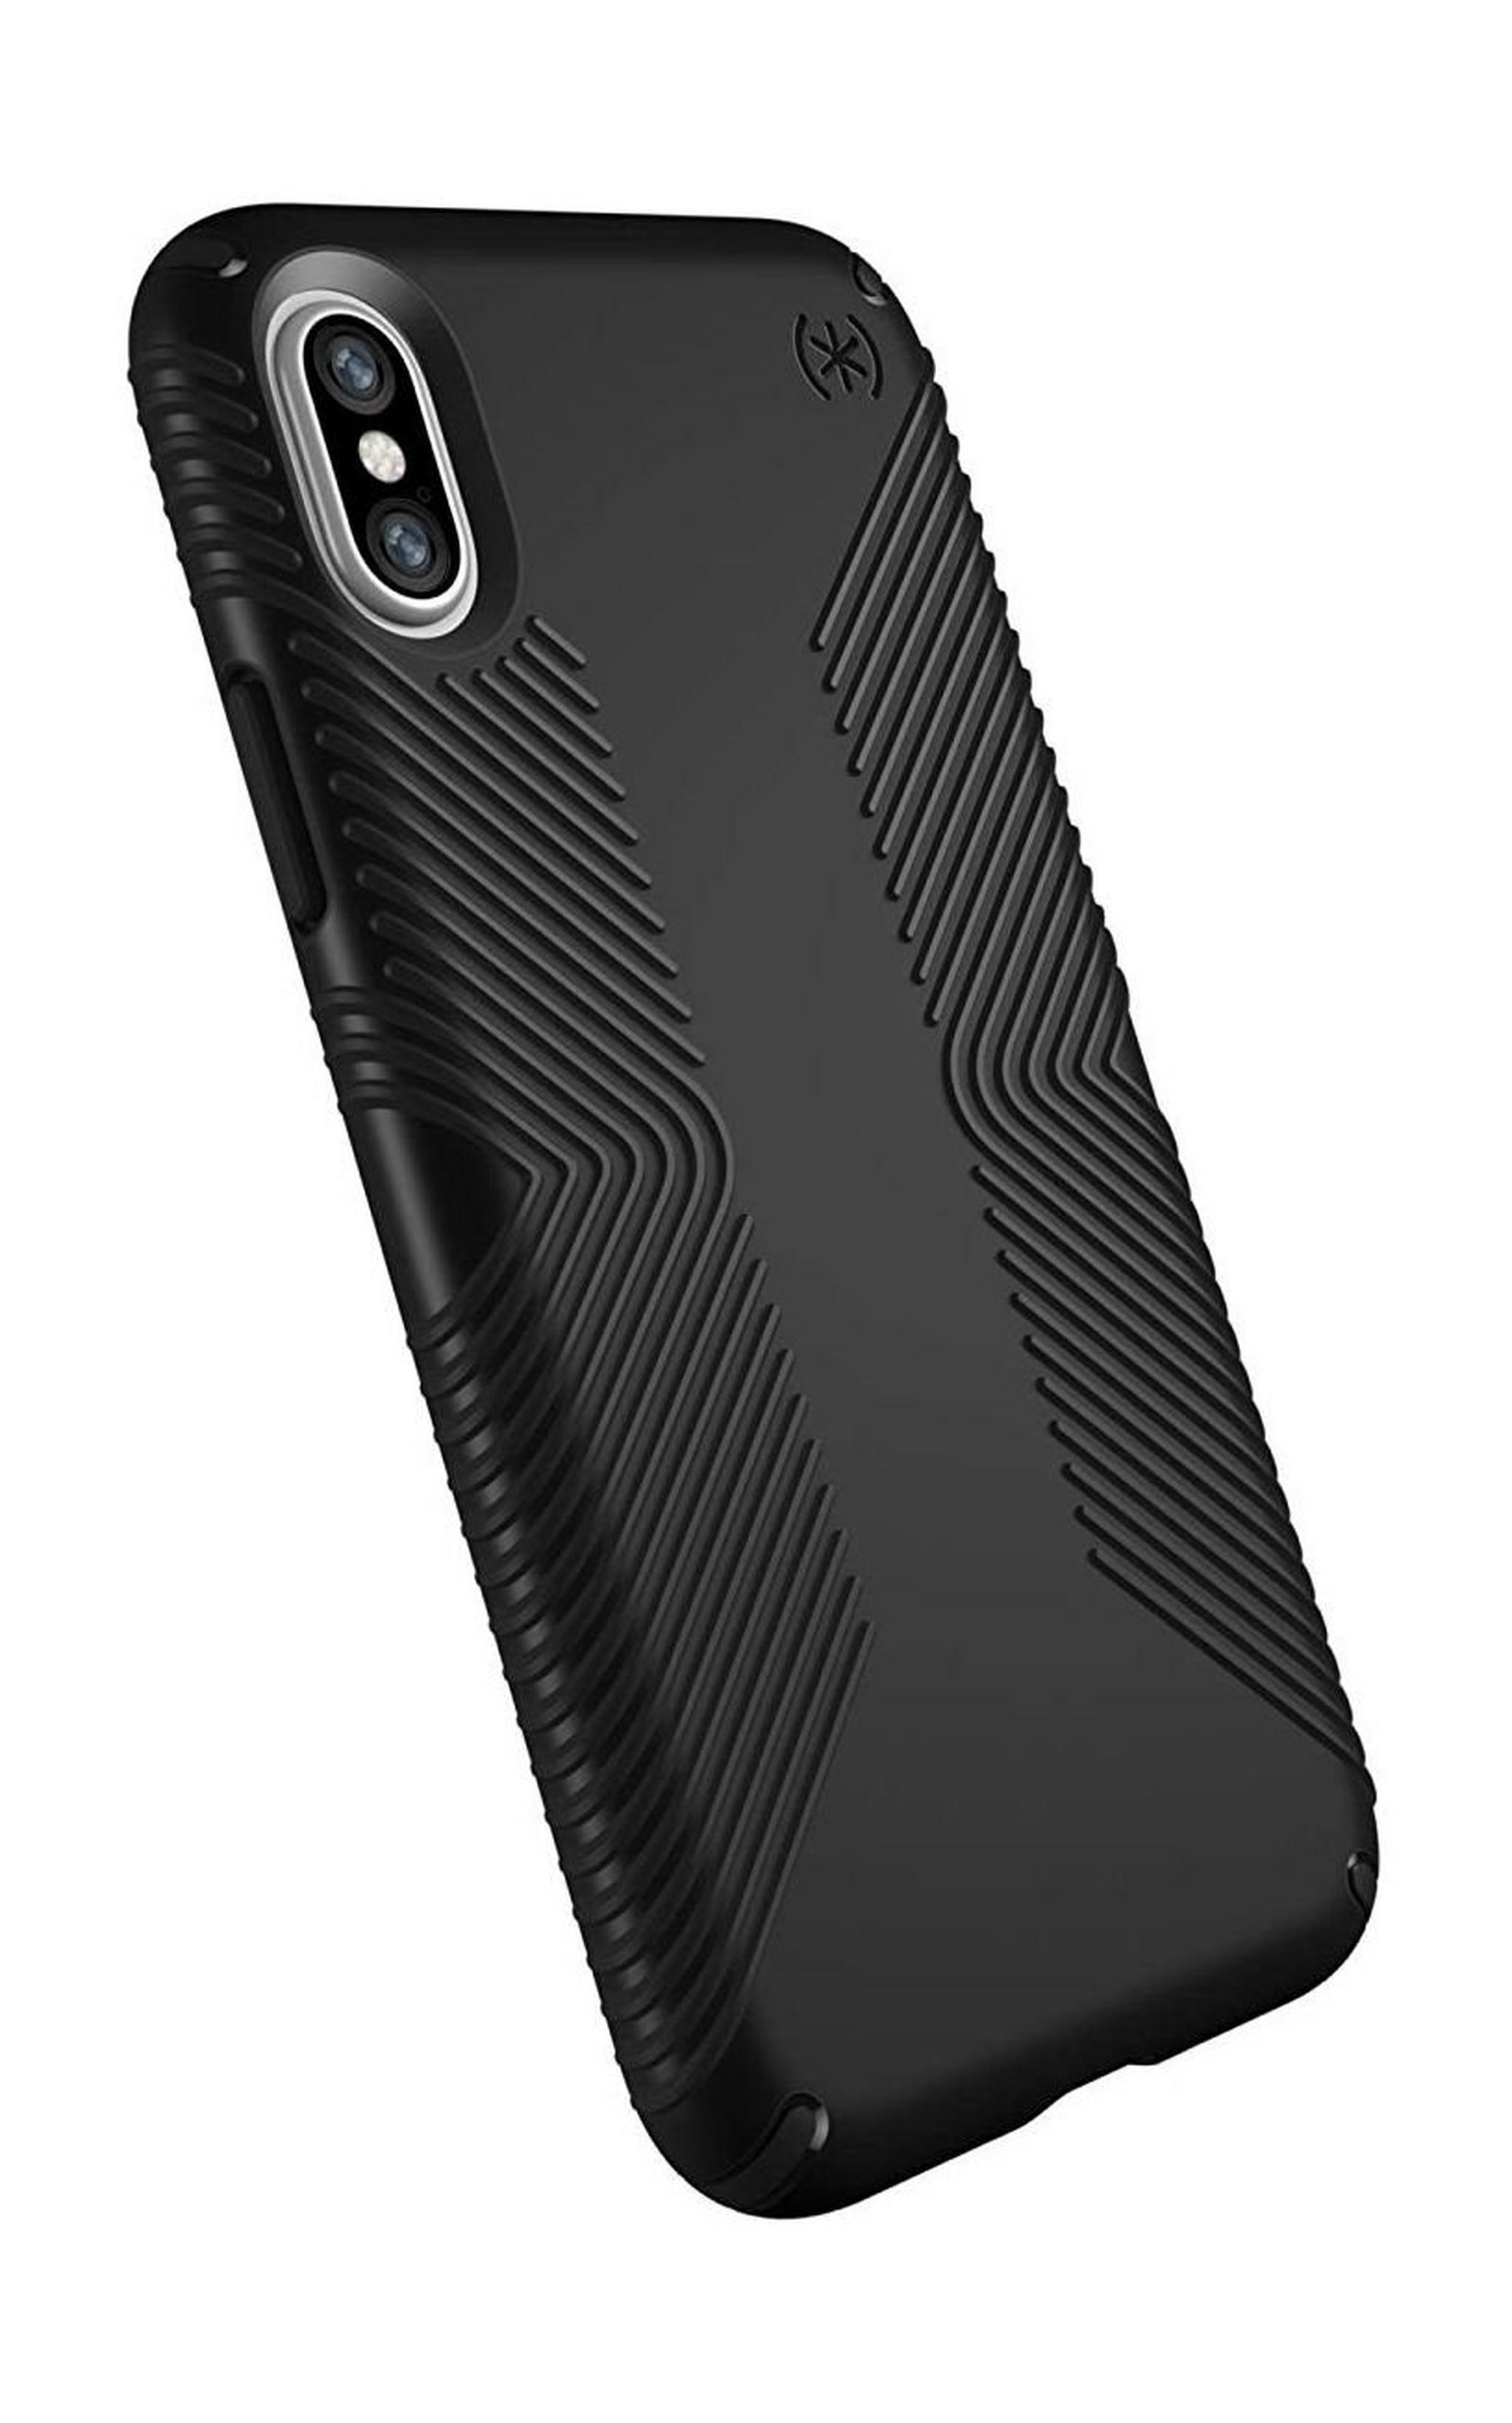 Speck Presidio Grip Case For iPhone XR - Black